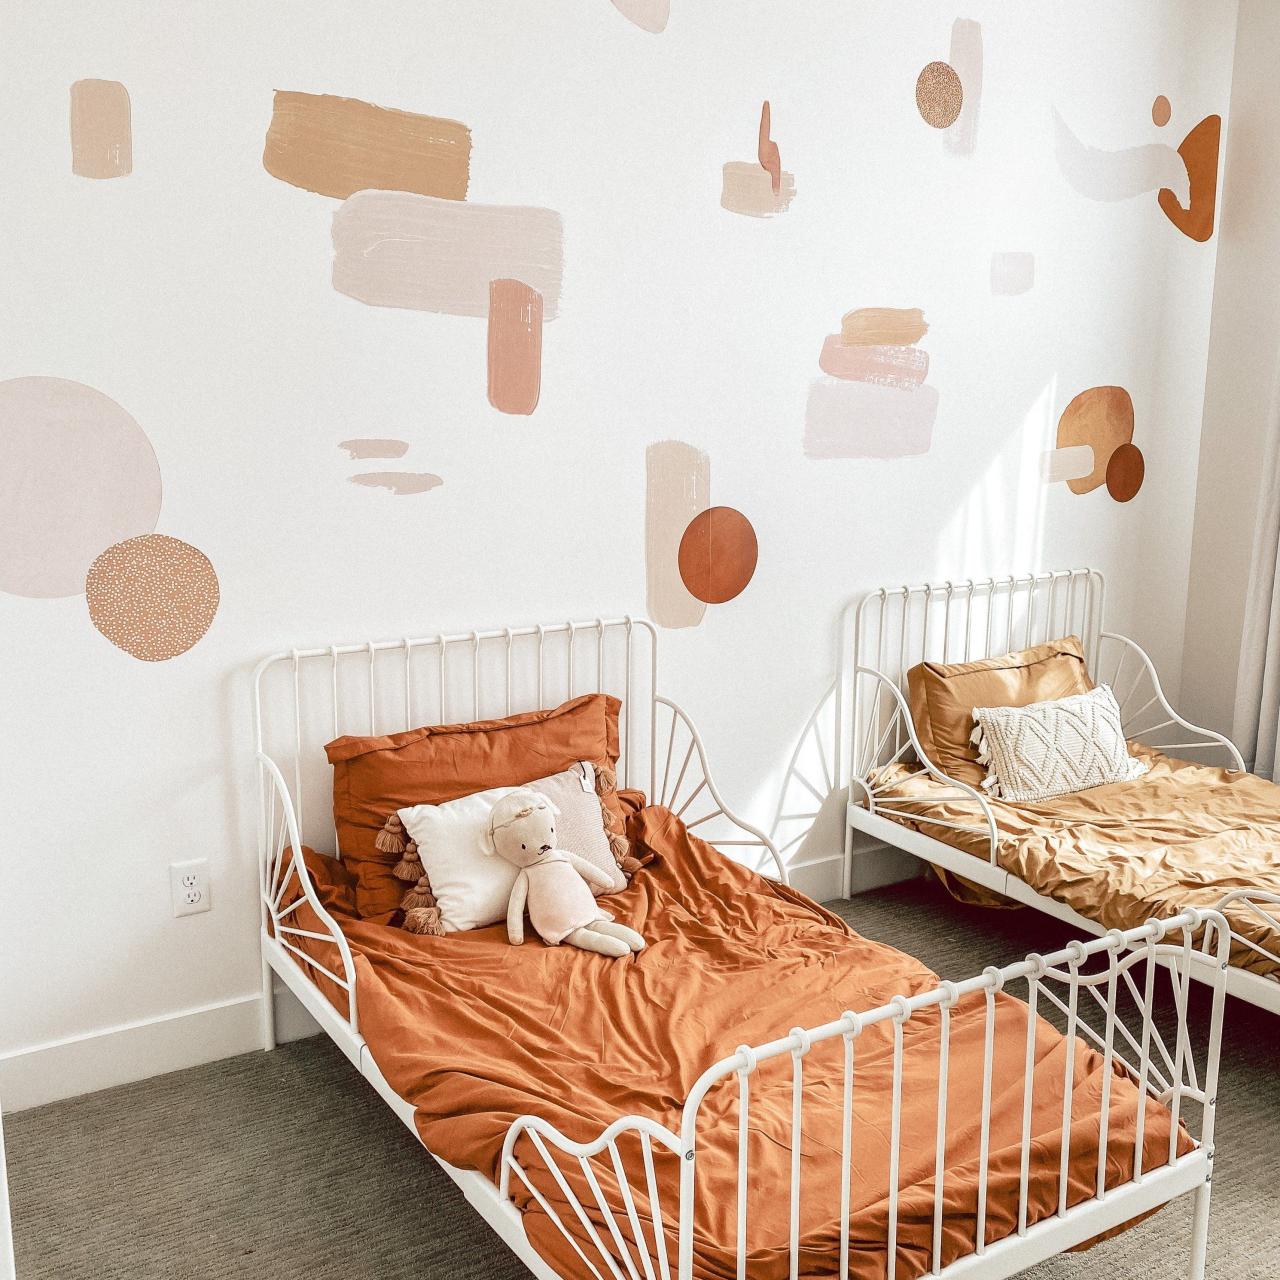 Gender-Neutral Bedroom Decor for Versatile Spaces